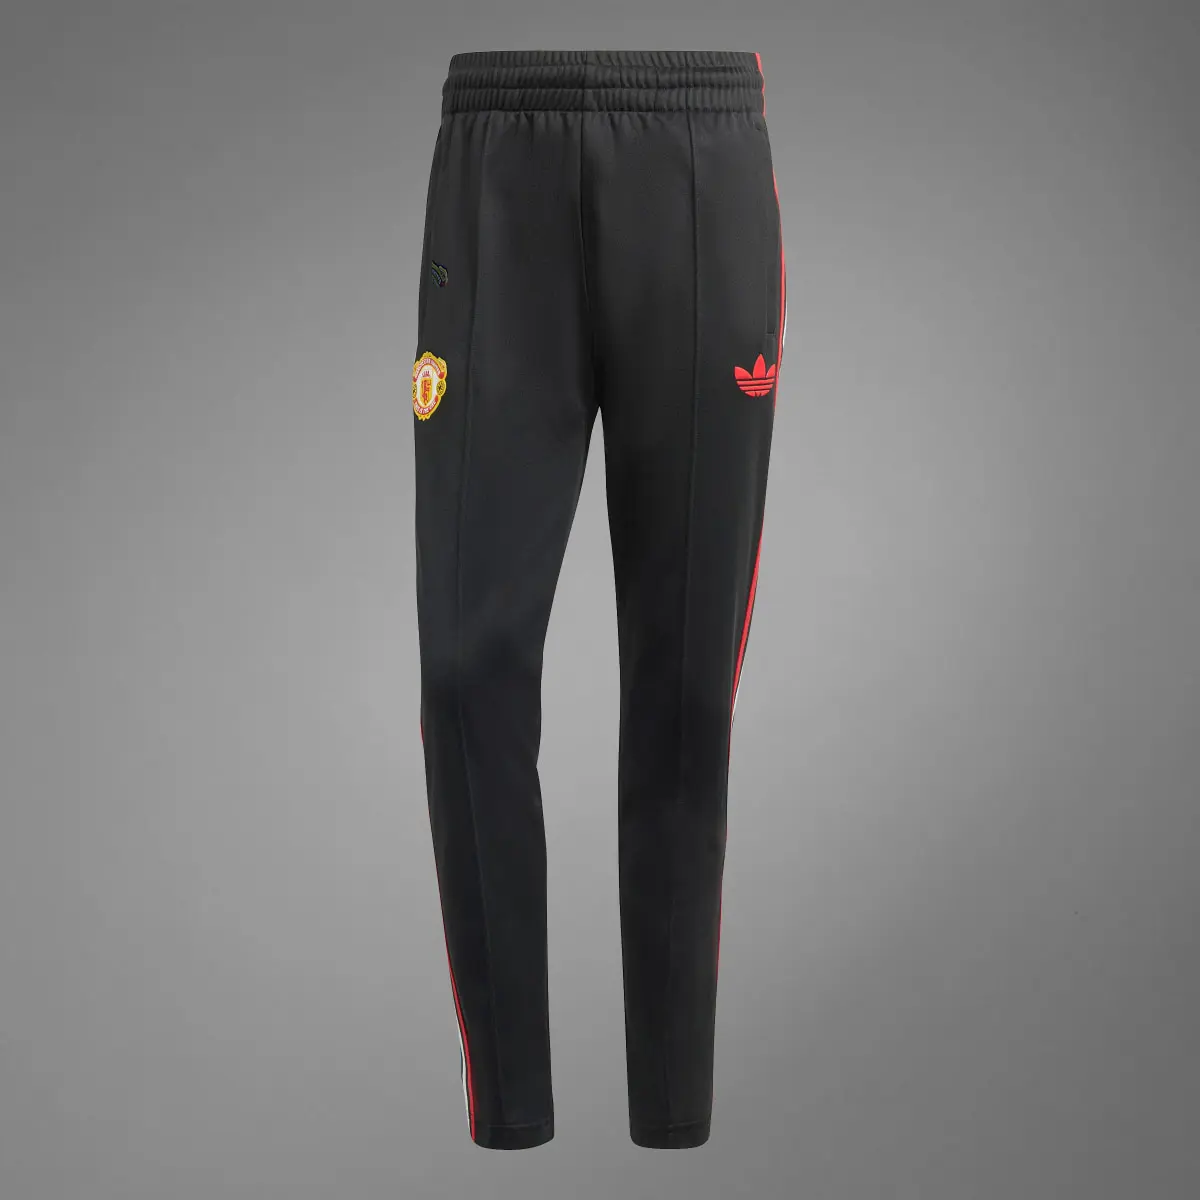 Adidas Pantalon Manchester United Stone Roses Originals. 3